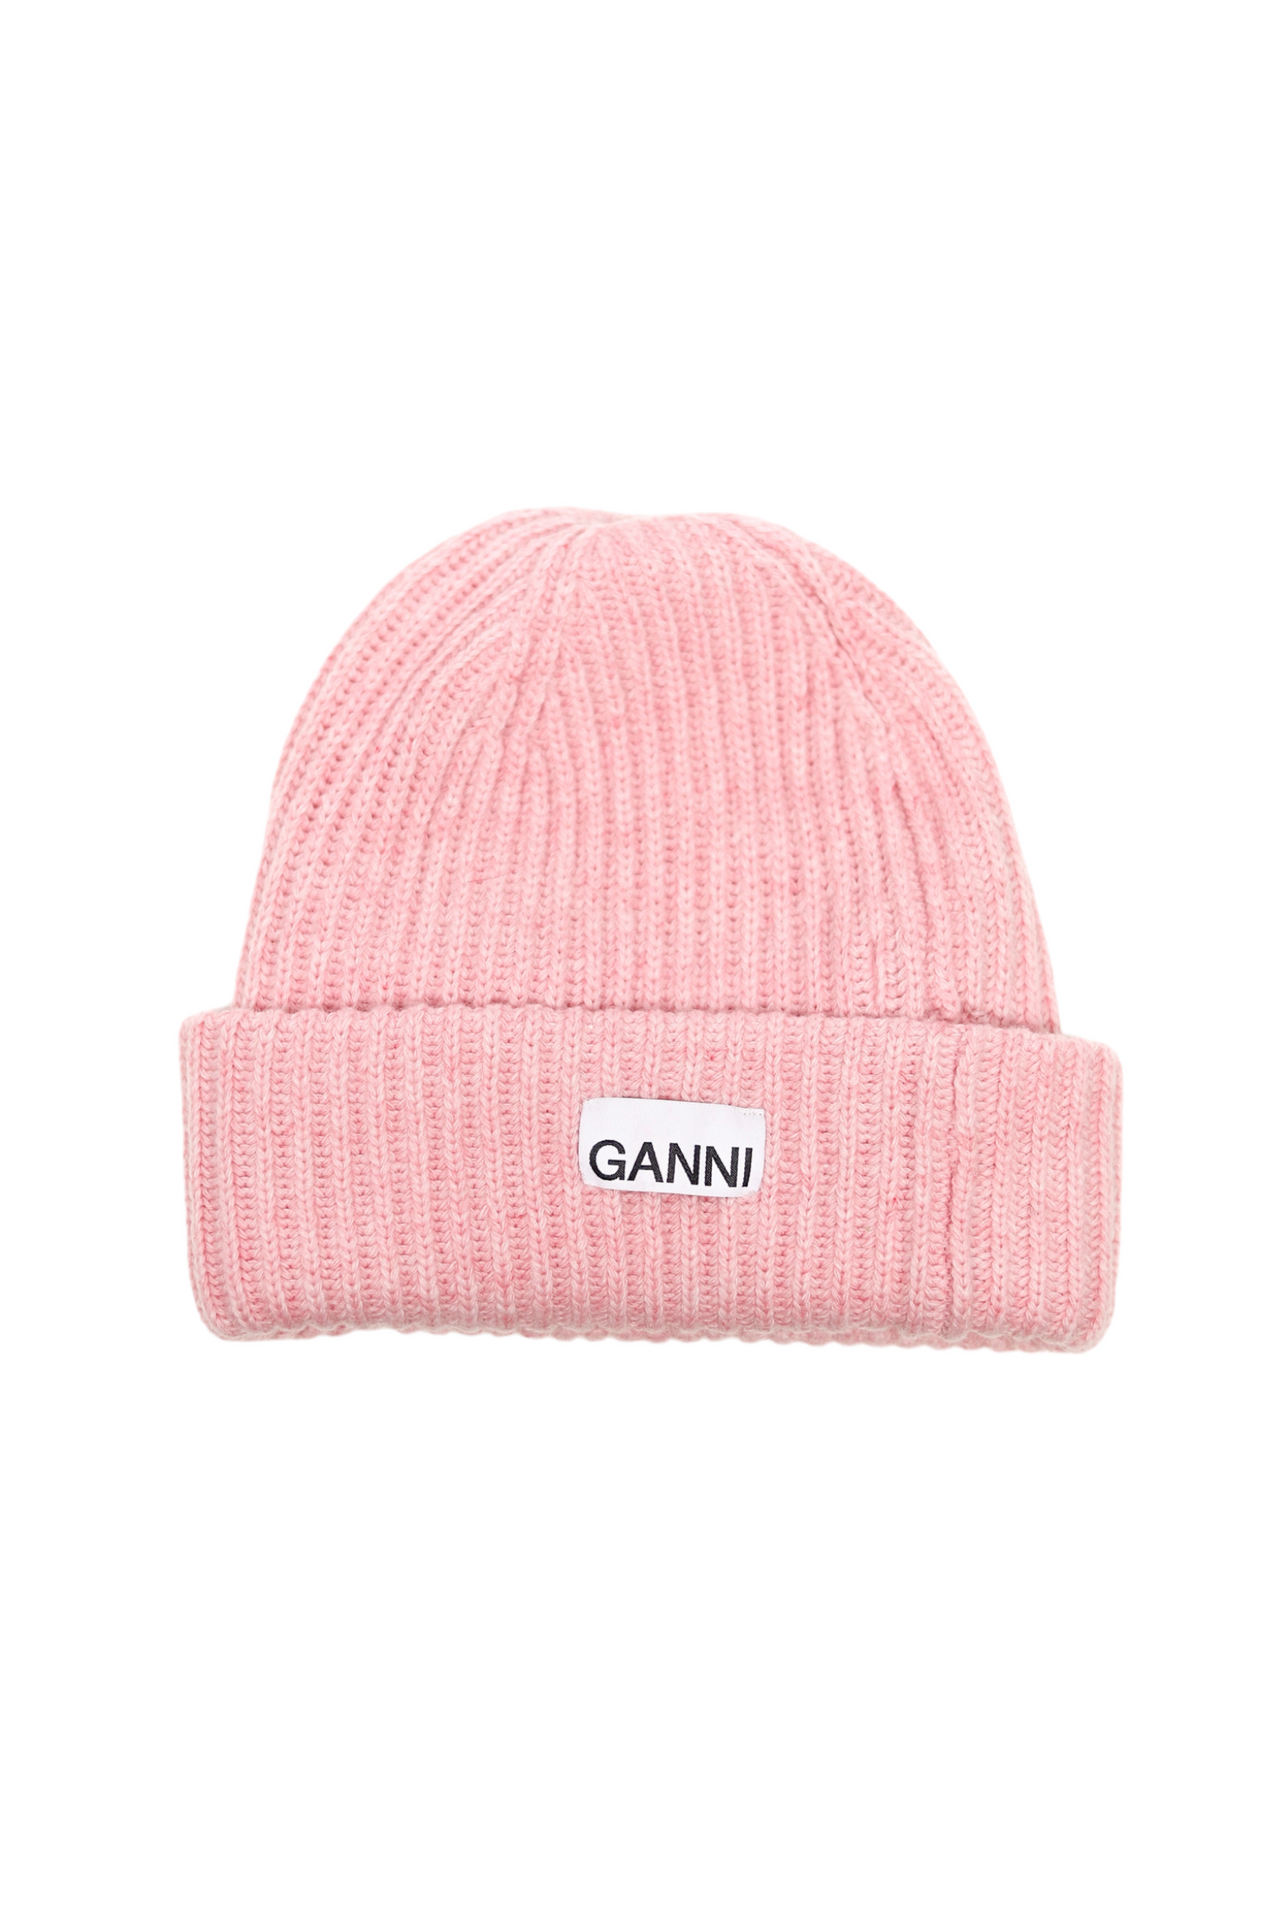 GANNI Wool Rib Knit Beanie Pink